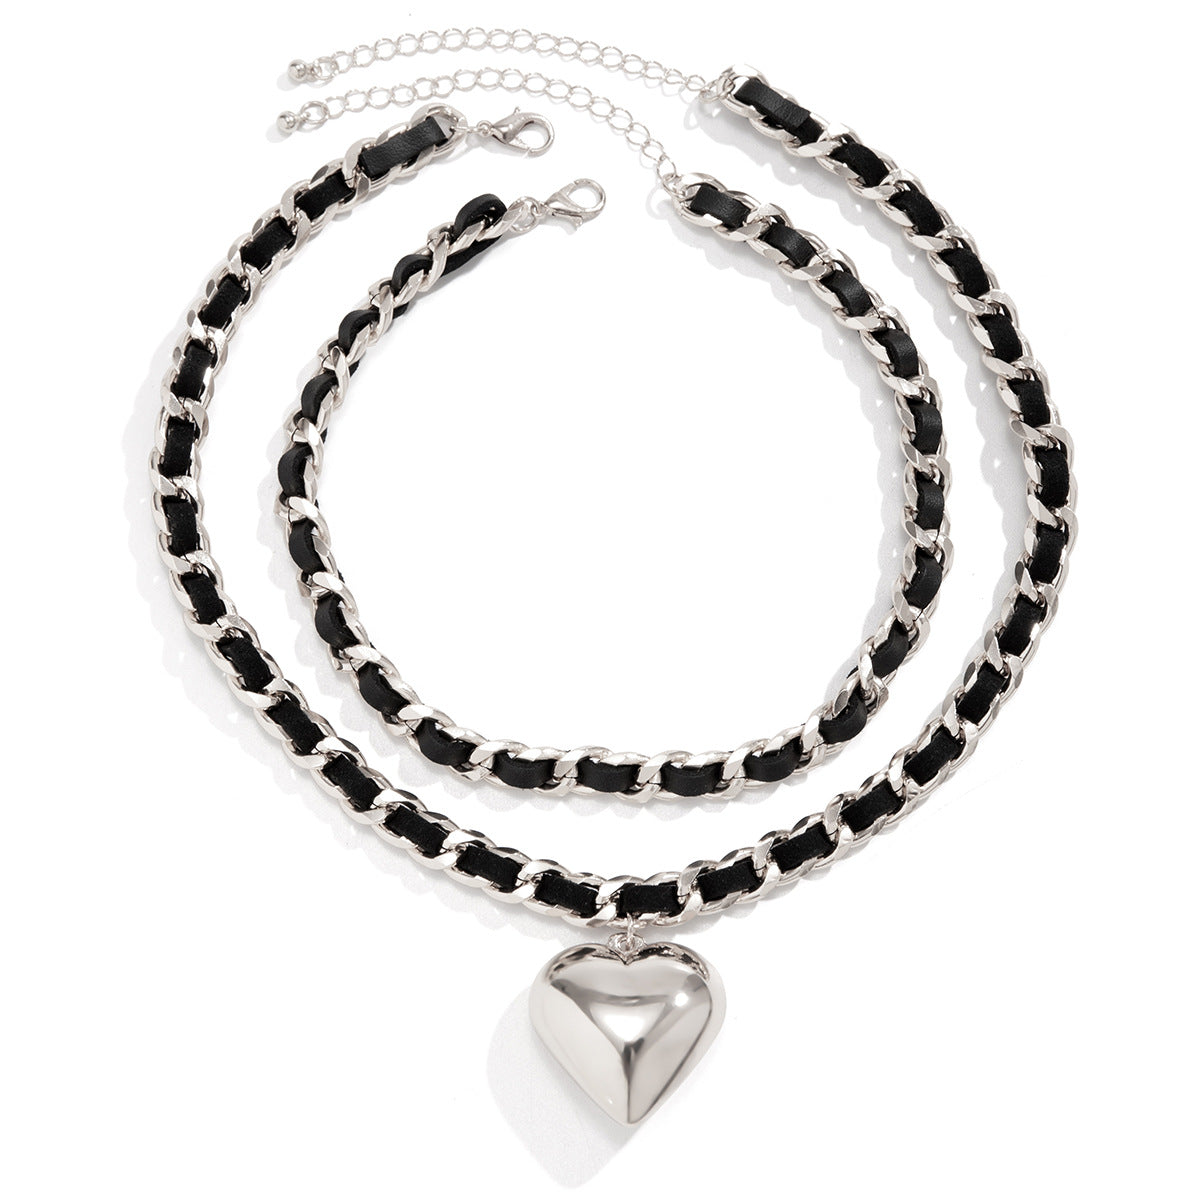 Collar de corazón   Big Love Double-layer Chains Design Necklace Women Street Punk Style Necklace Fashion Jewelry